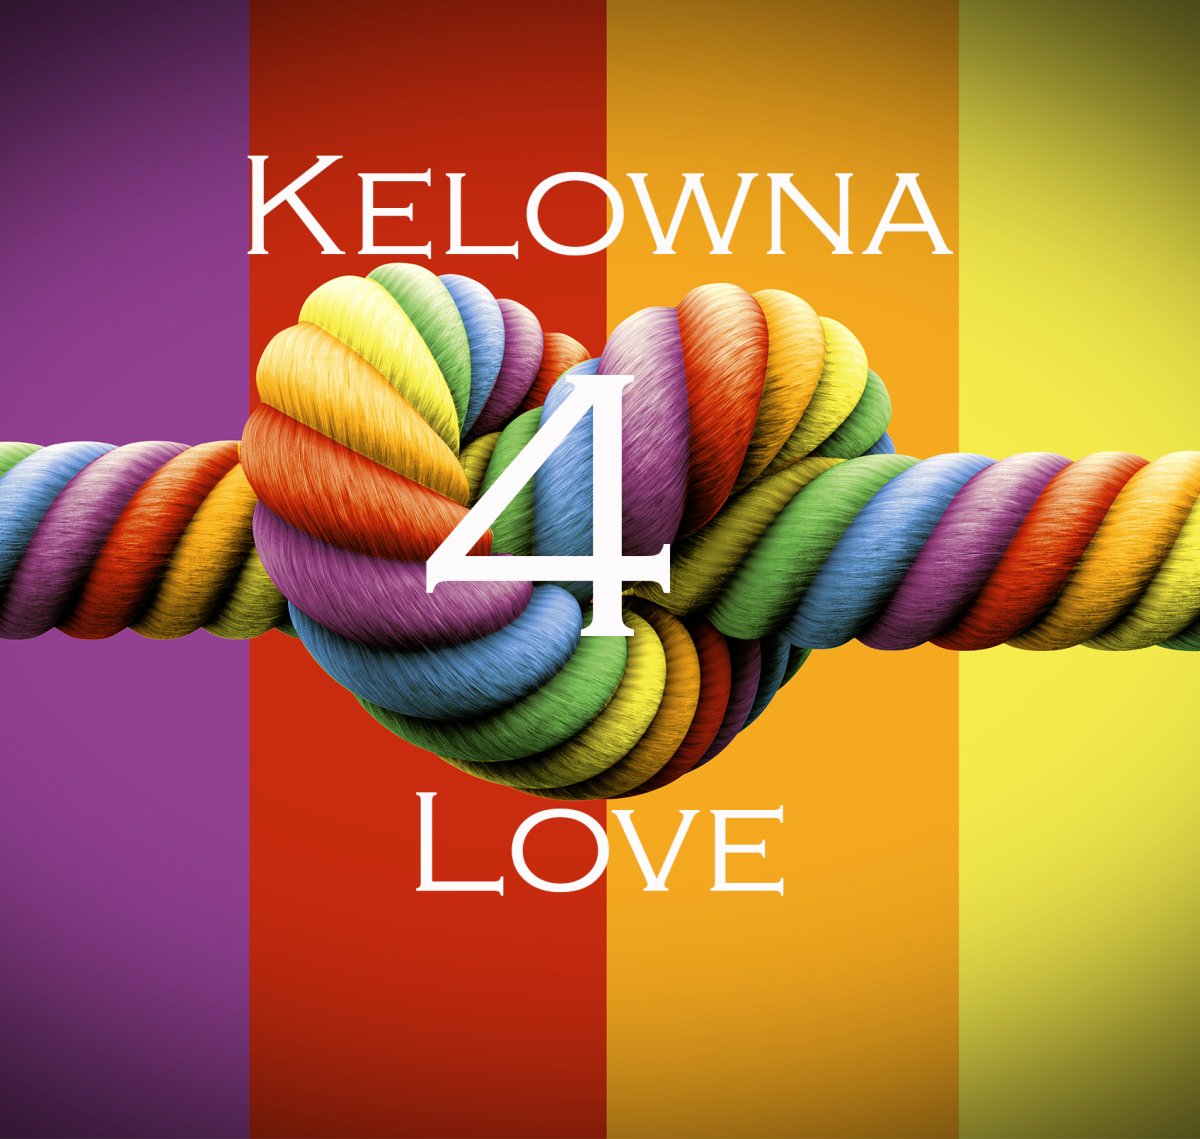 Kelowna 4 Love - image